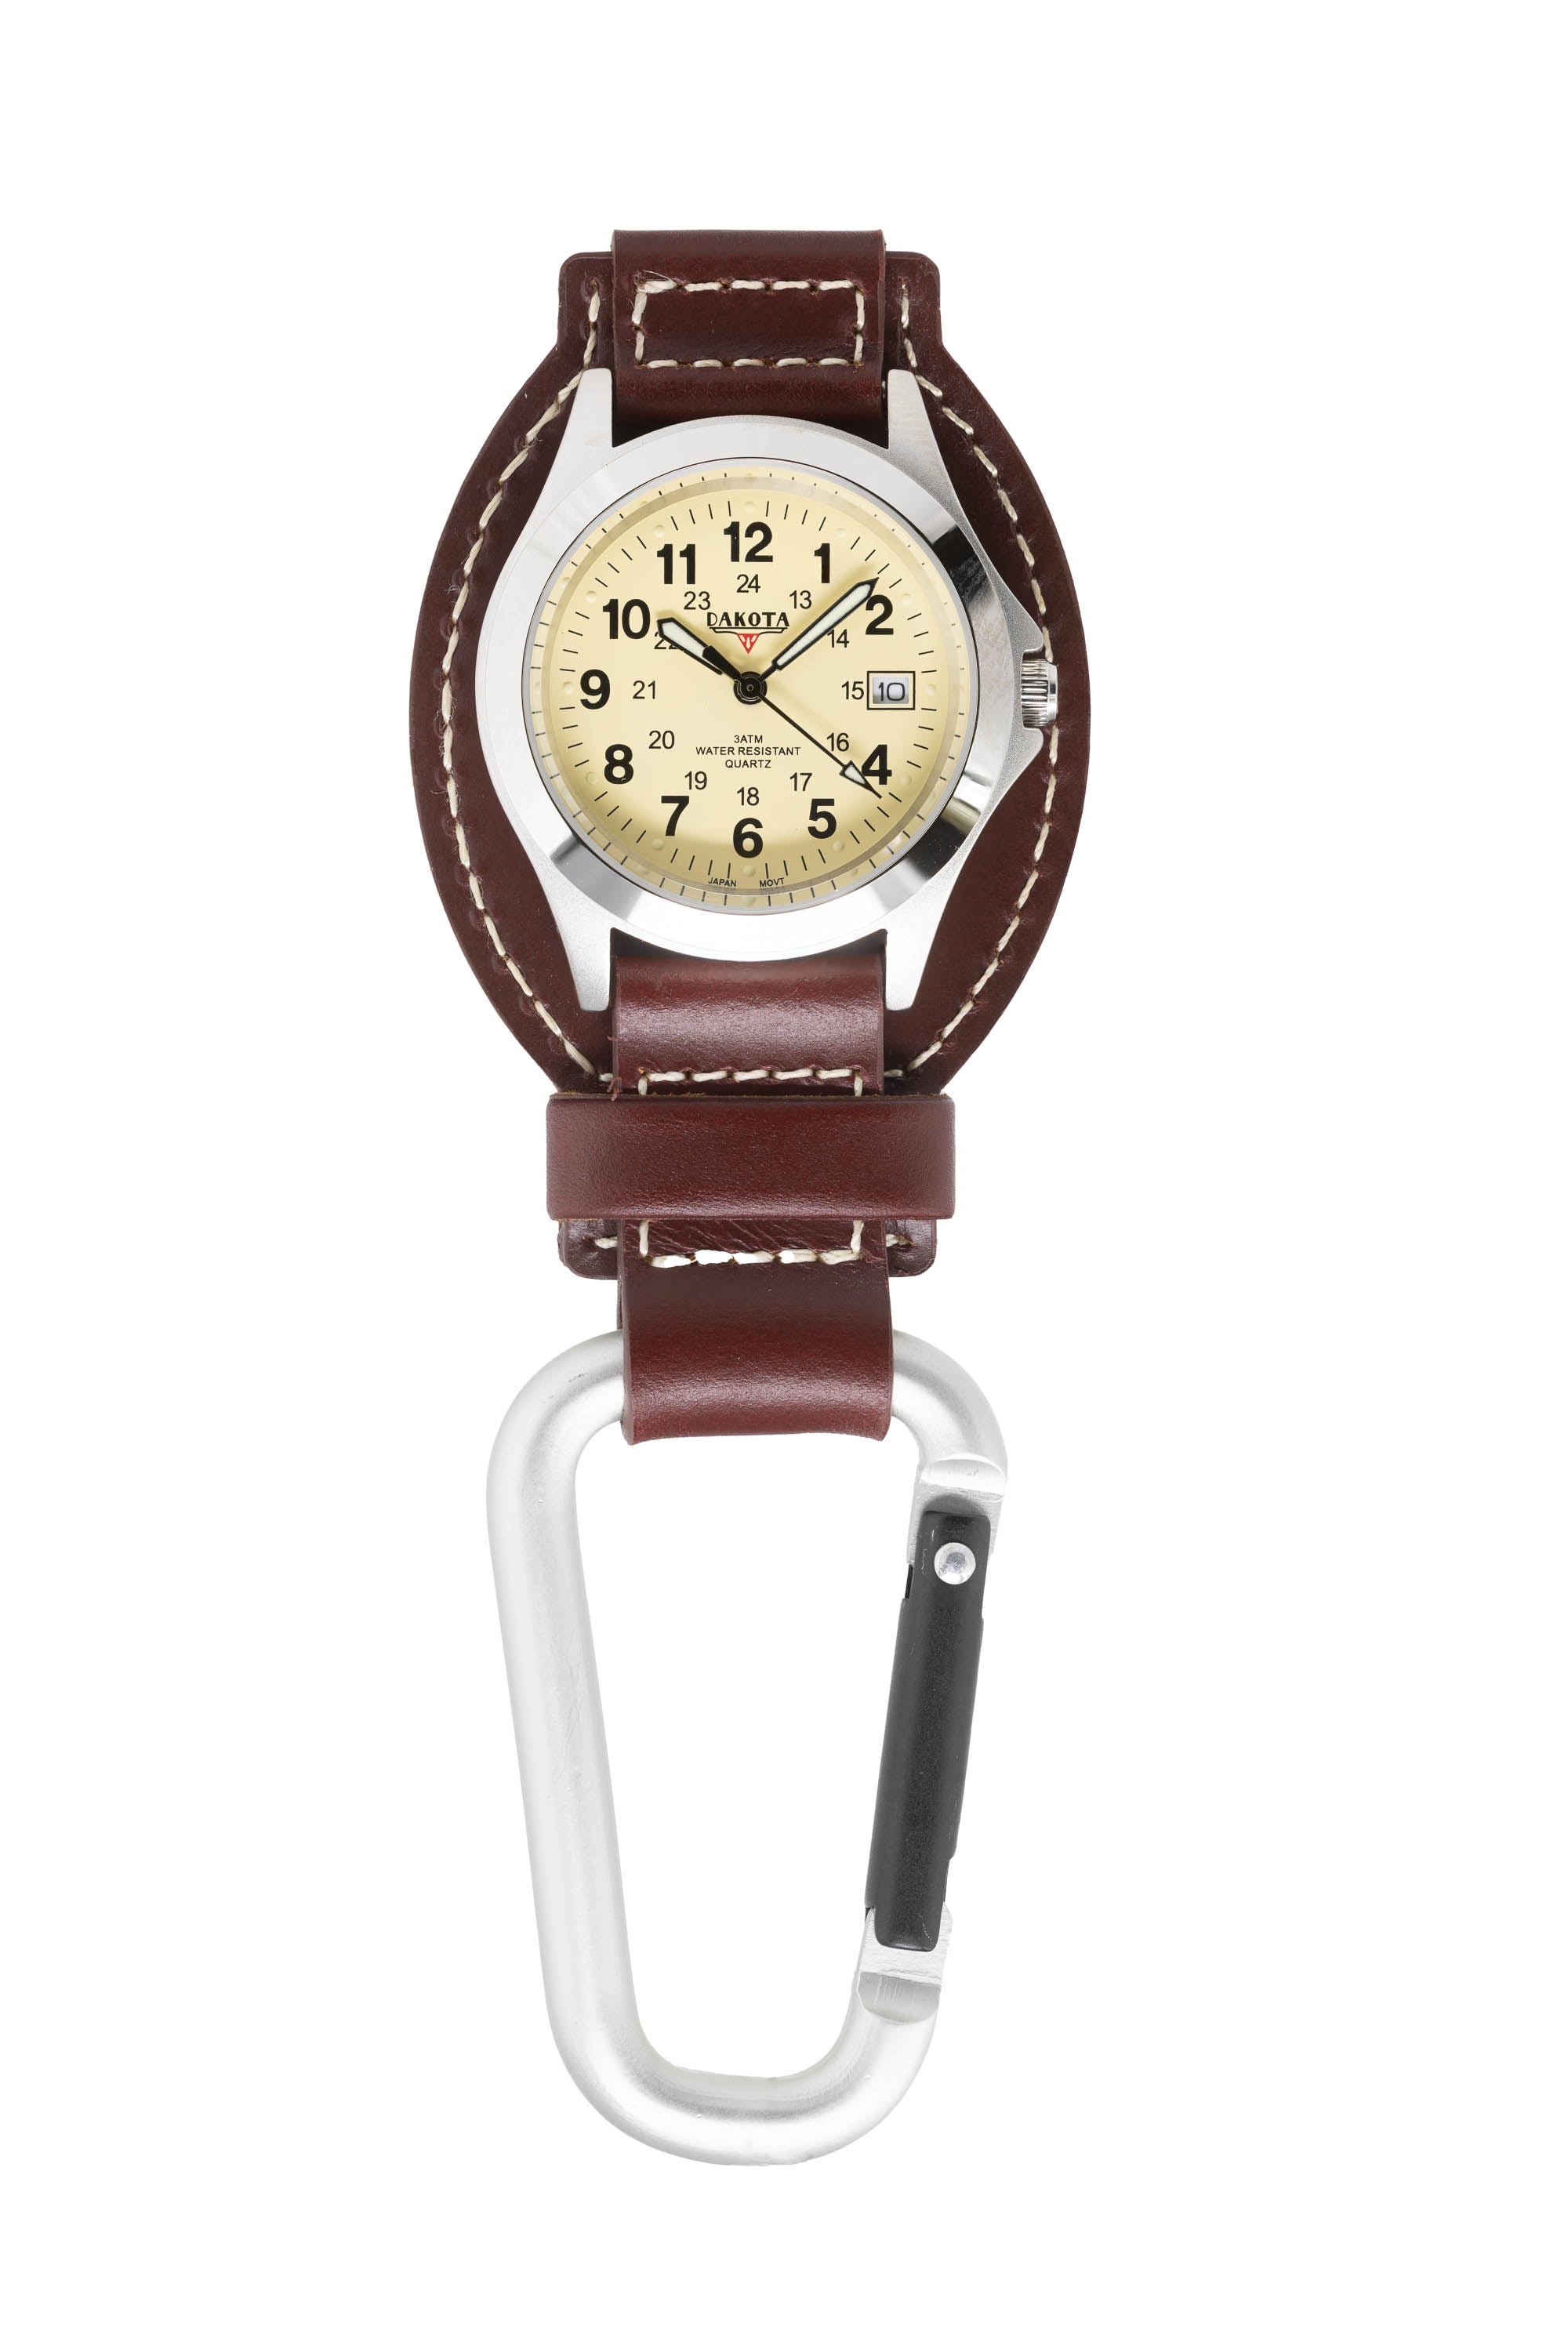 Clip / Backpacker Watches | Watchmaking since 1945 – dakotawatch